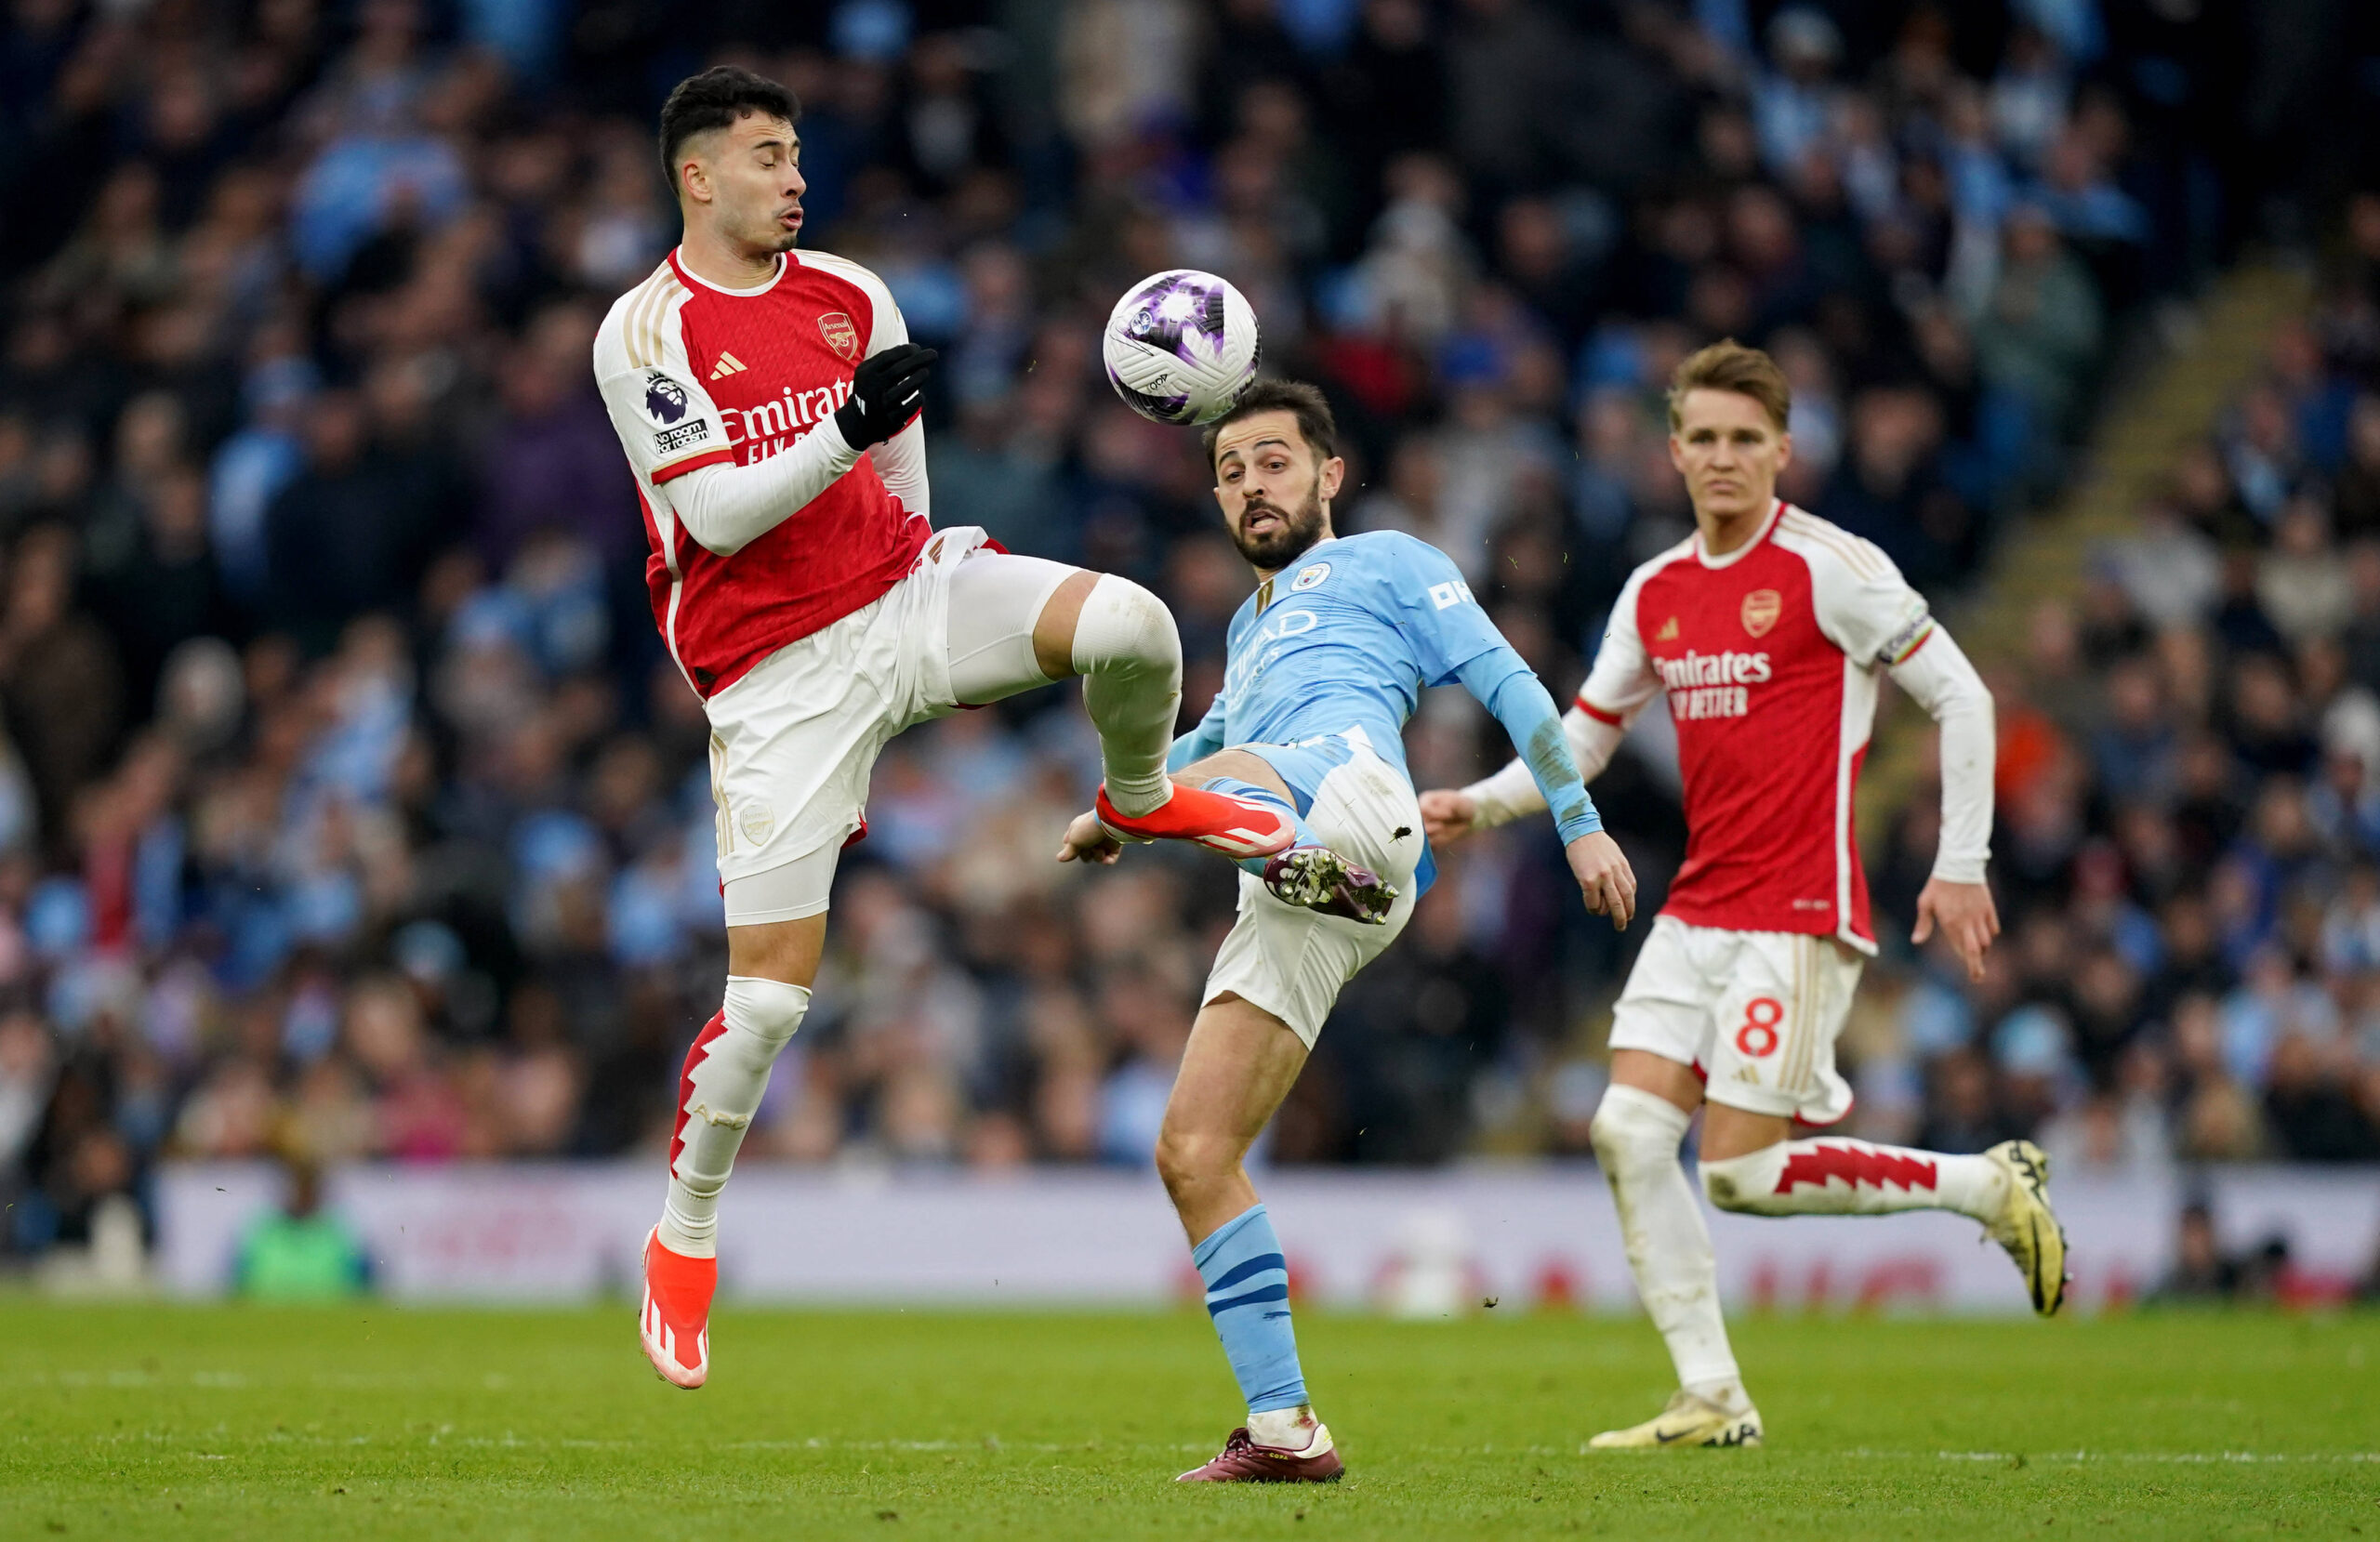 Arsenal winger Gabriel Martinelli fights Manchester City's Bernardo Silva for the ball.